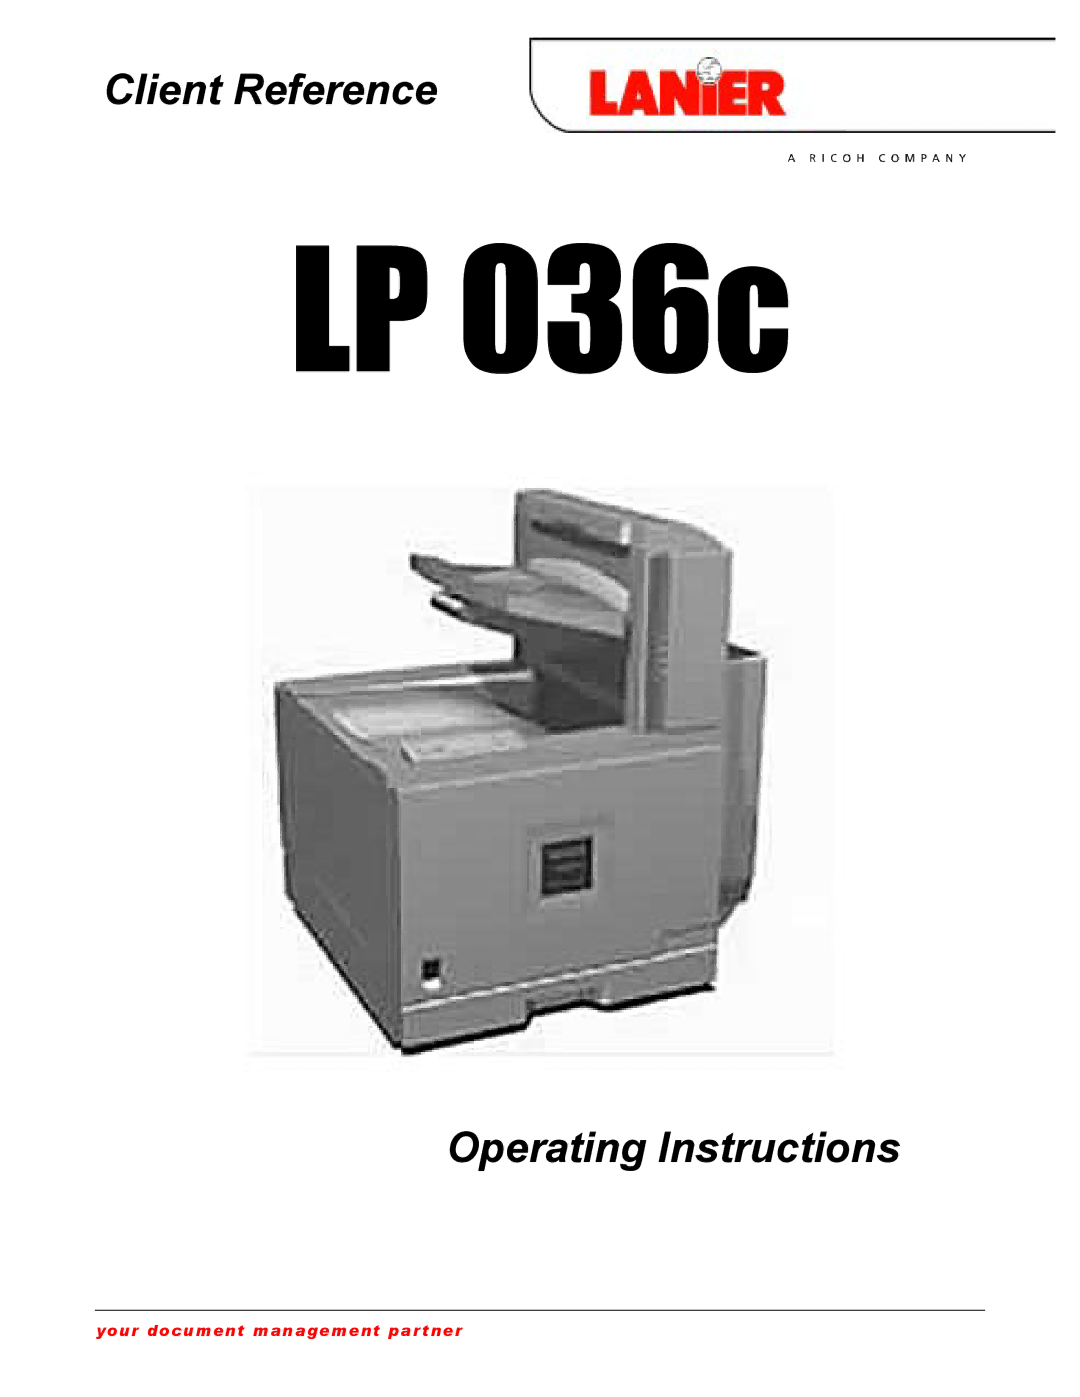 Lanier LP 036c operating instructions 